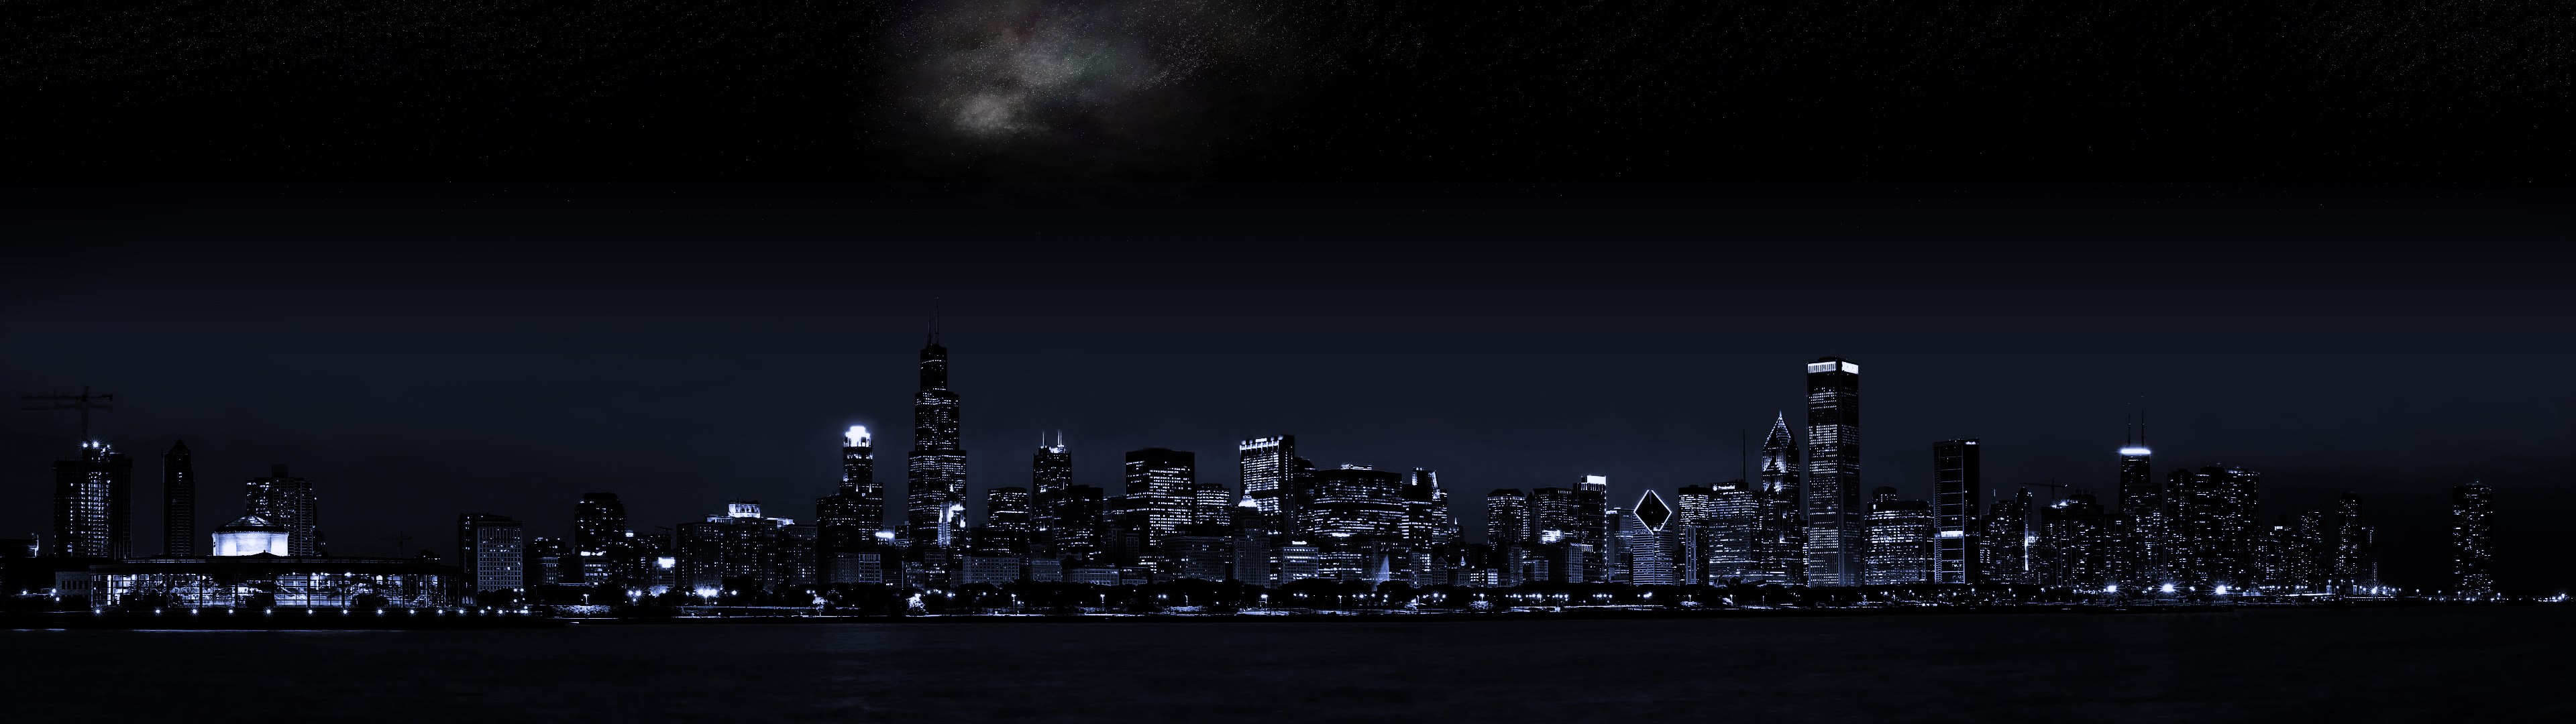 City At Night Wallpaper Hq